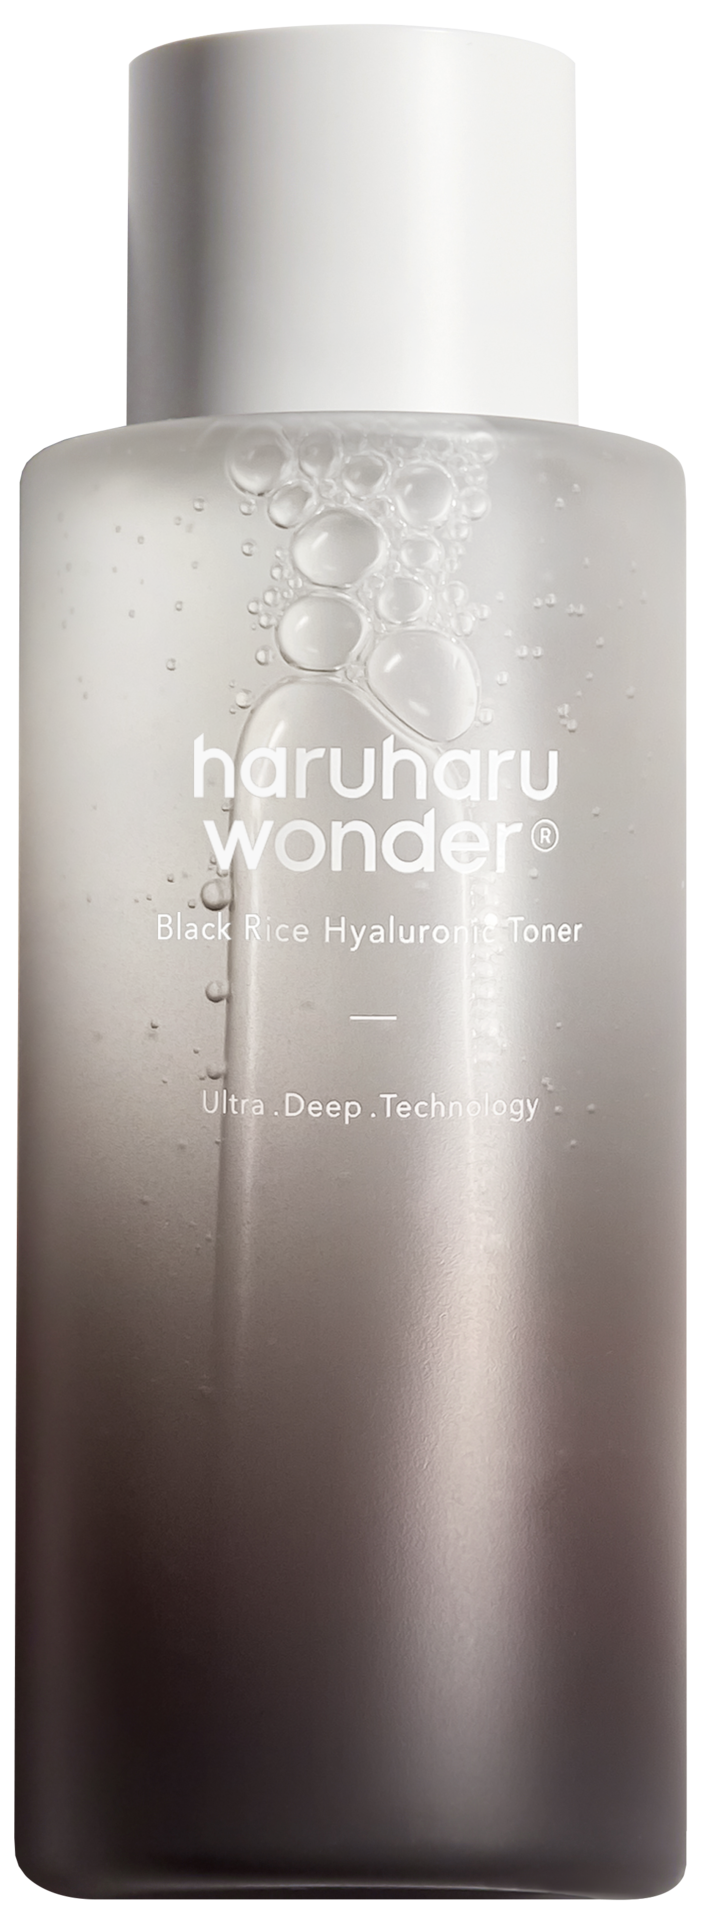 Haruharu Wonder Black Rice Hyaluronic Toner150ml